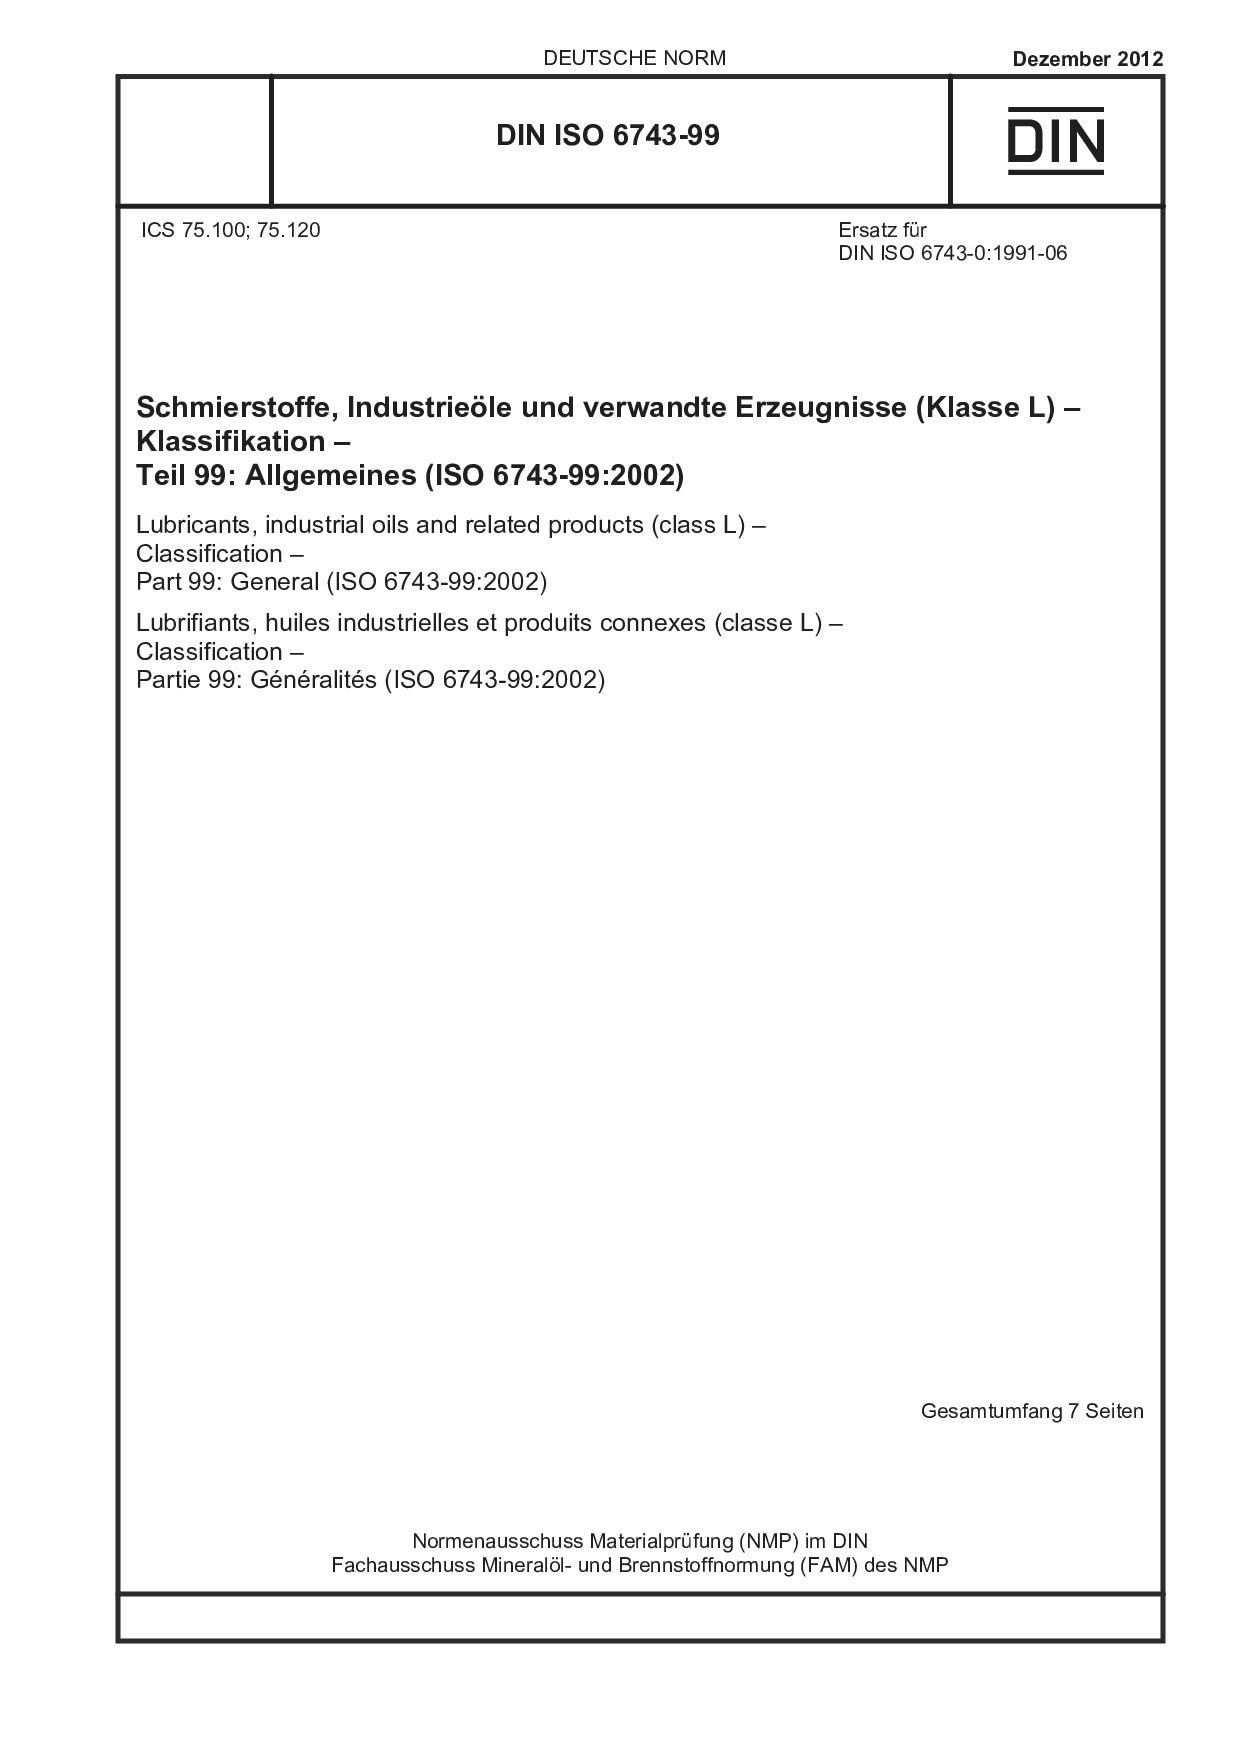 DIN ISO 6743-99:2012